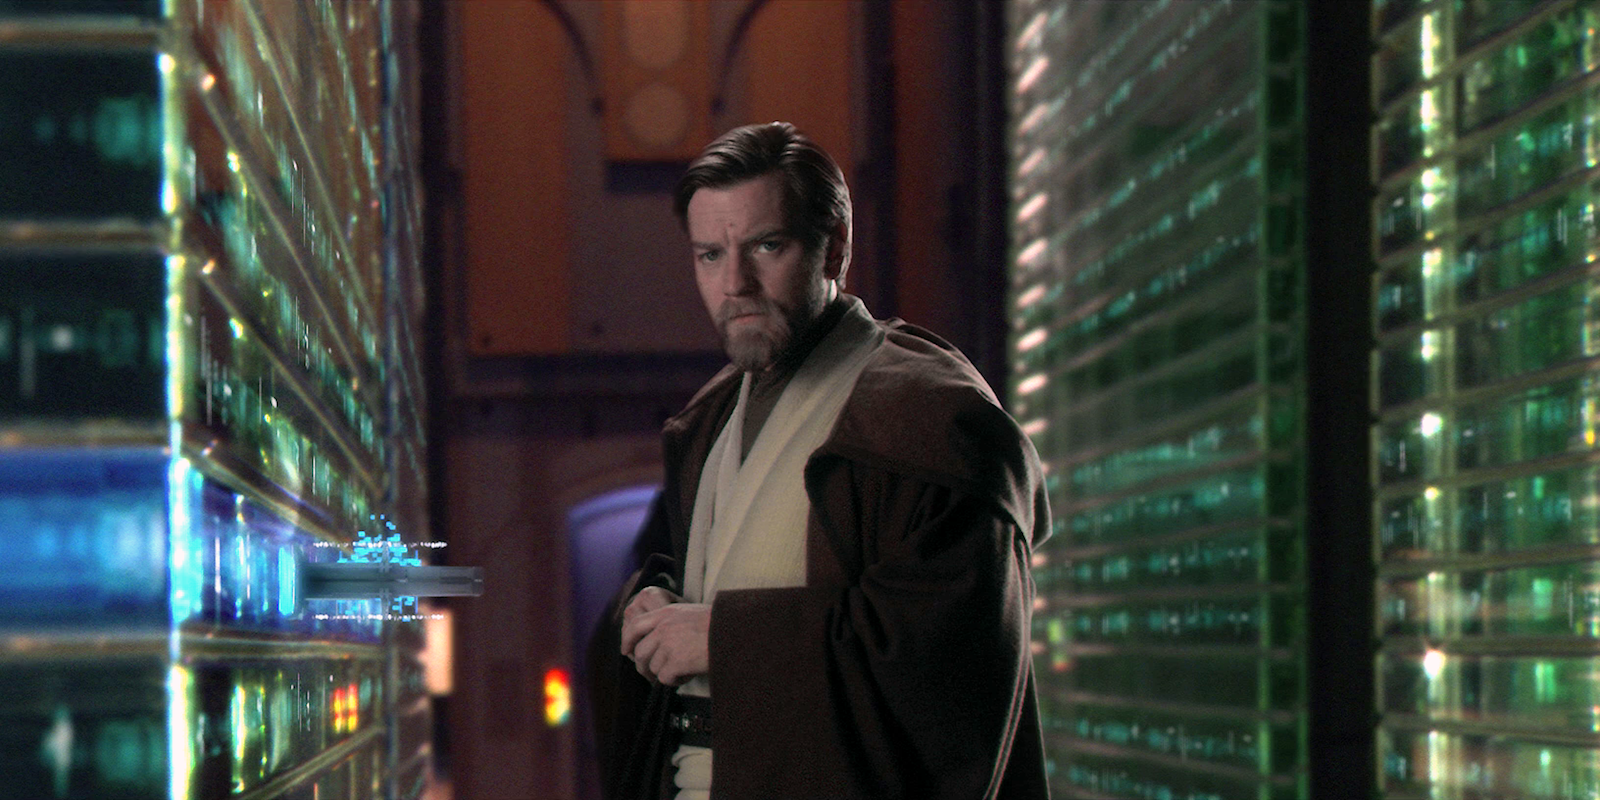 Obi-Wan Kenobi in Star Wars Revenge of the Sith